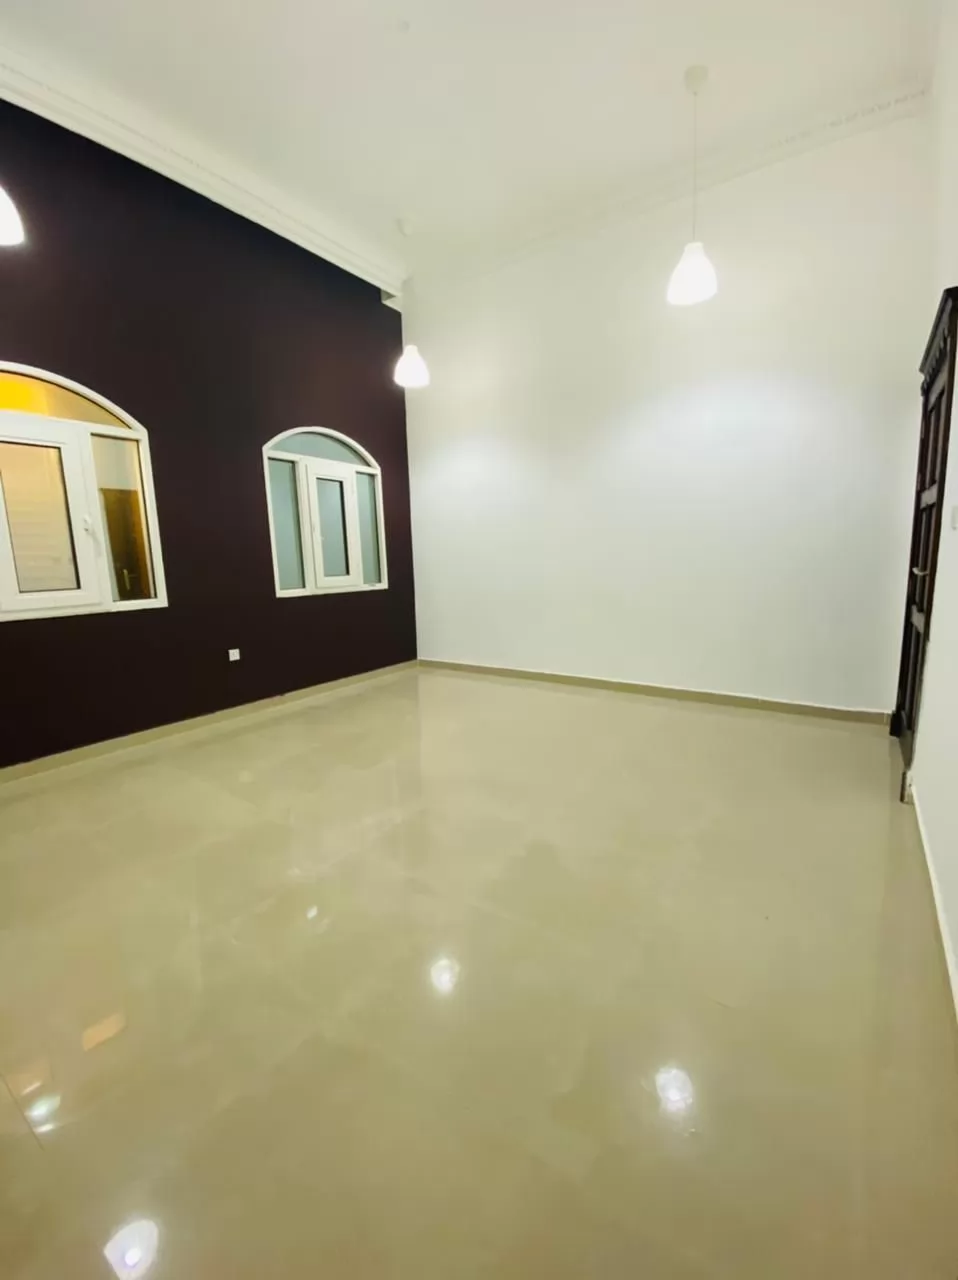 Residential Ready Property Studio S/F Apartment  for rent in Al-Wukair , Al Wakrah #14348 - 1  image 